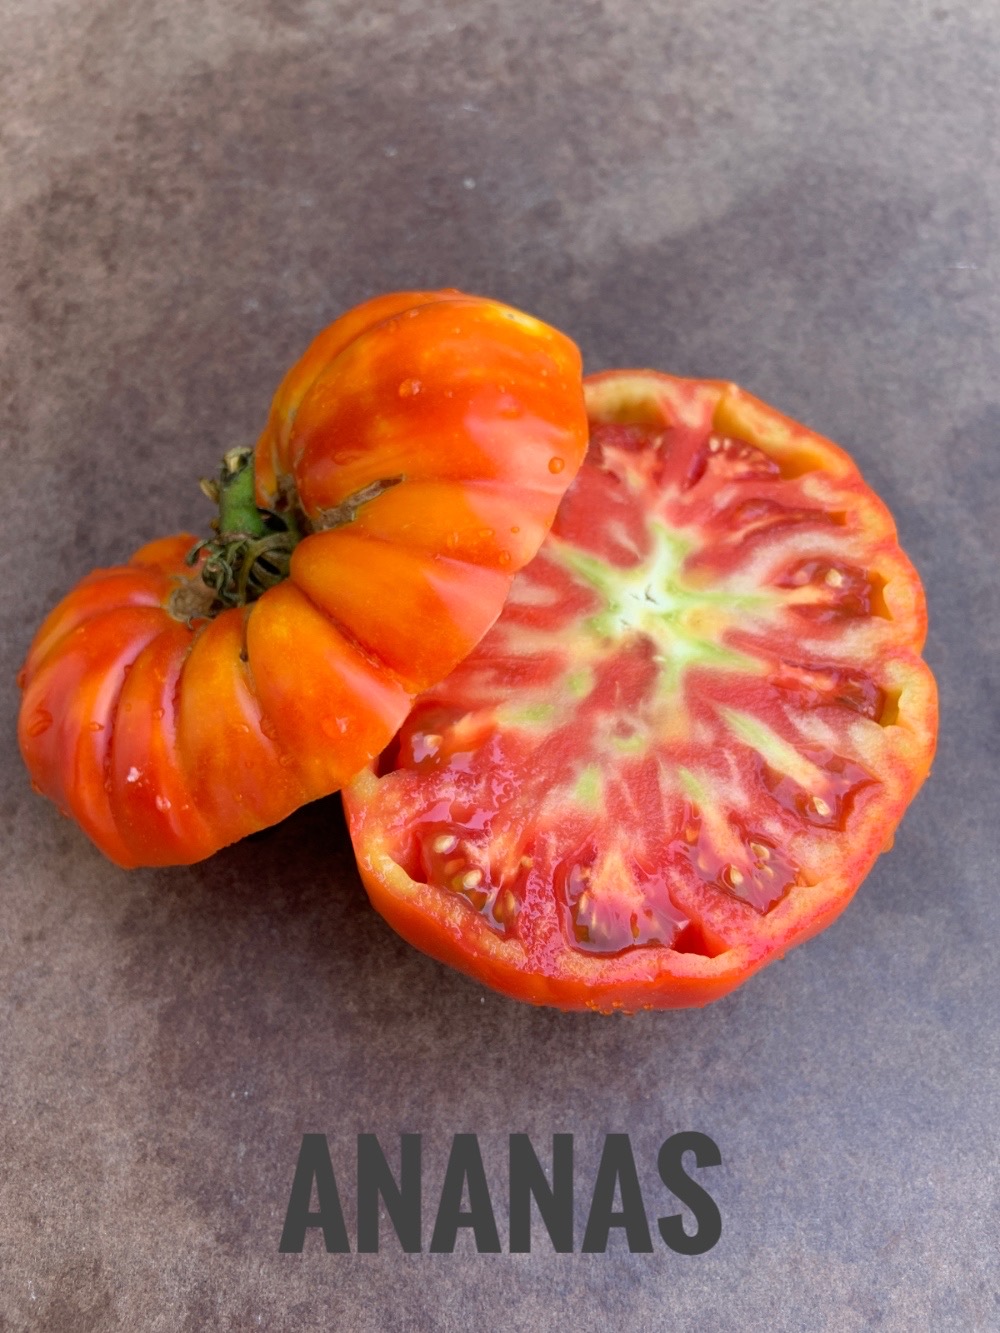 Pomodoro varietà Ananas | Fattipomodorituoi | ©foto Sandra Longinotti